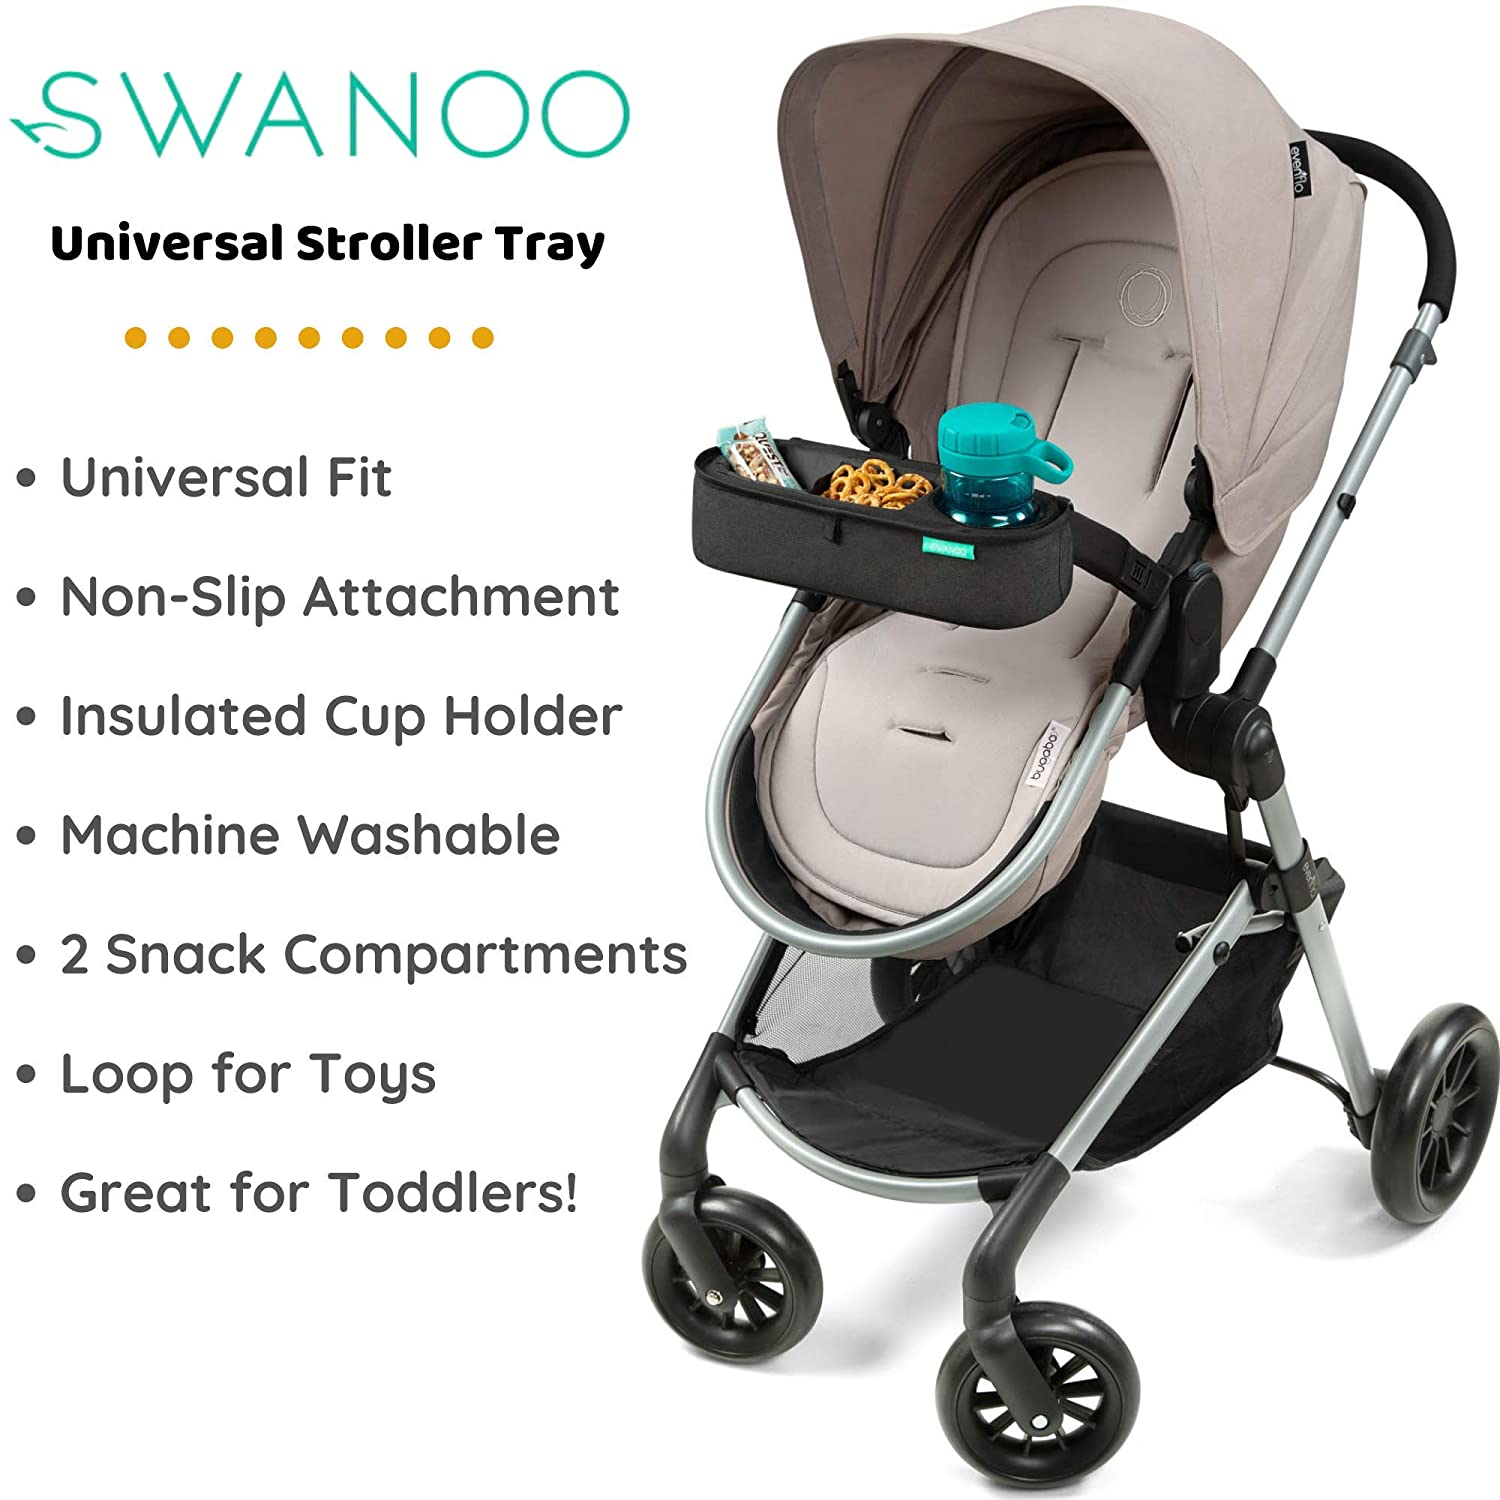 Swanoo Universal Stroller Tray - Swanoo